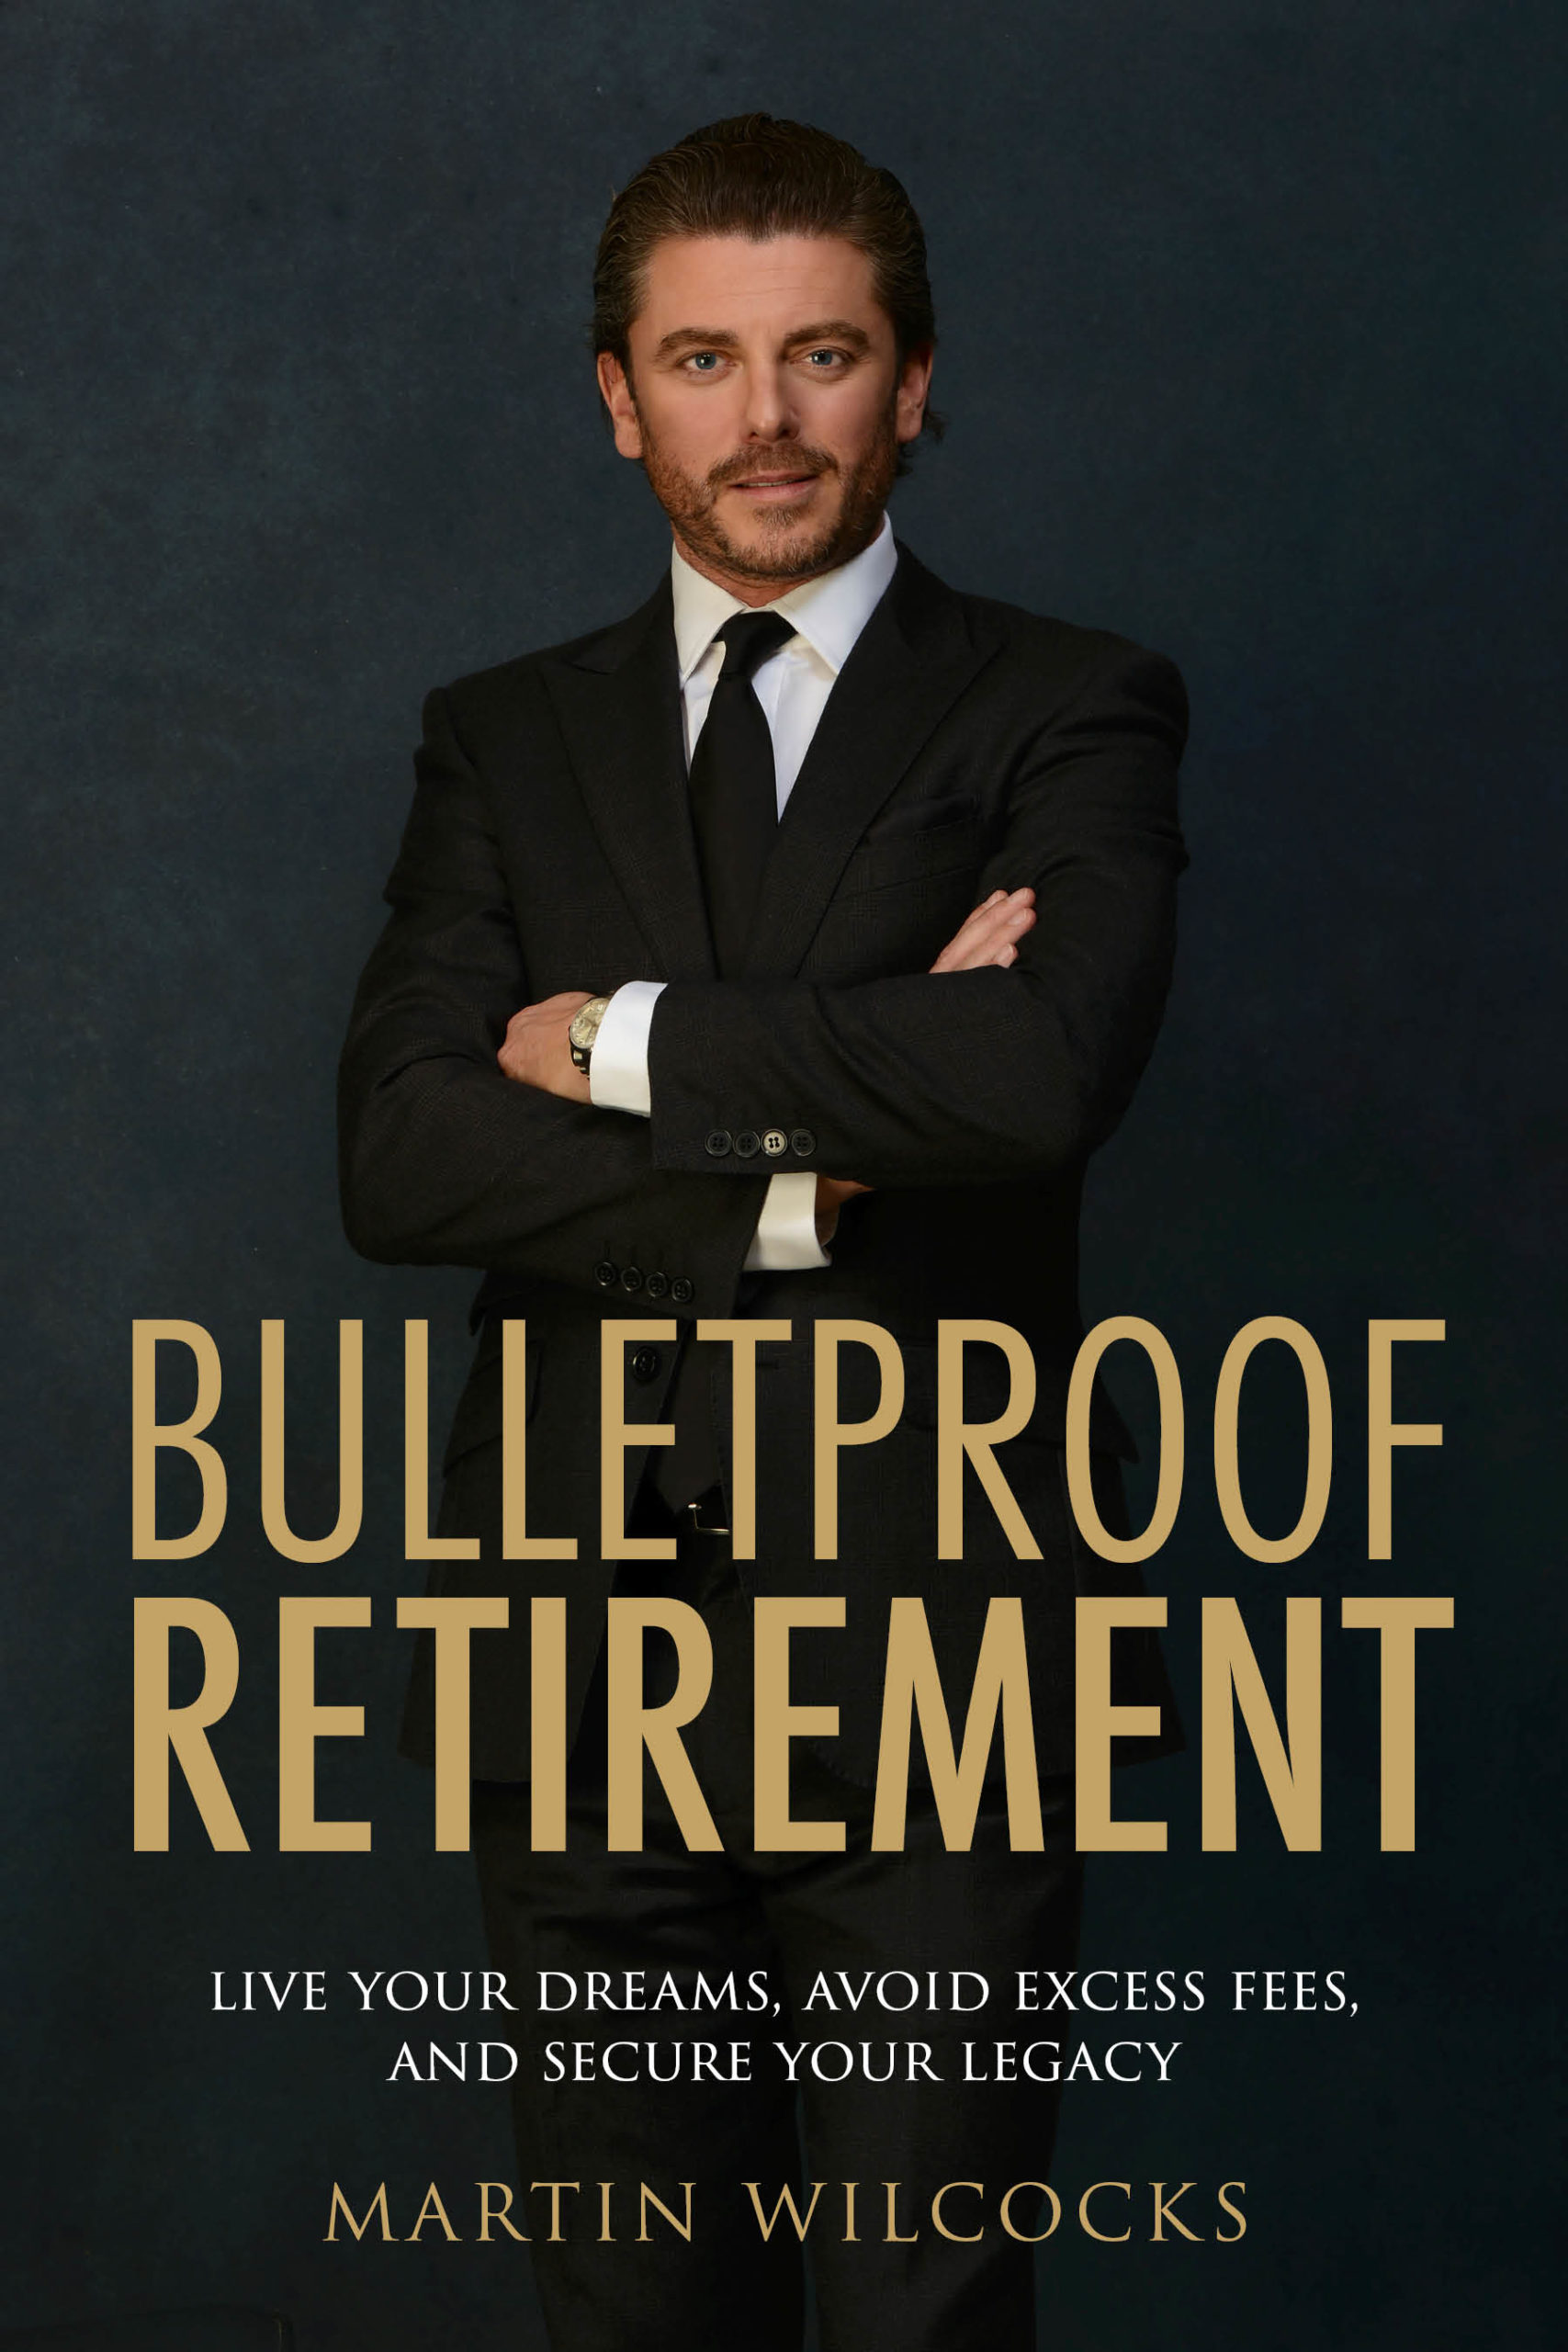 Bulletproof Retirement